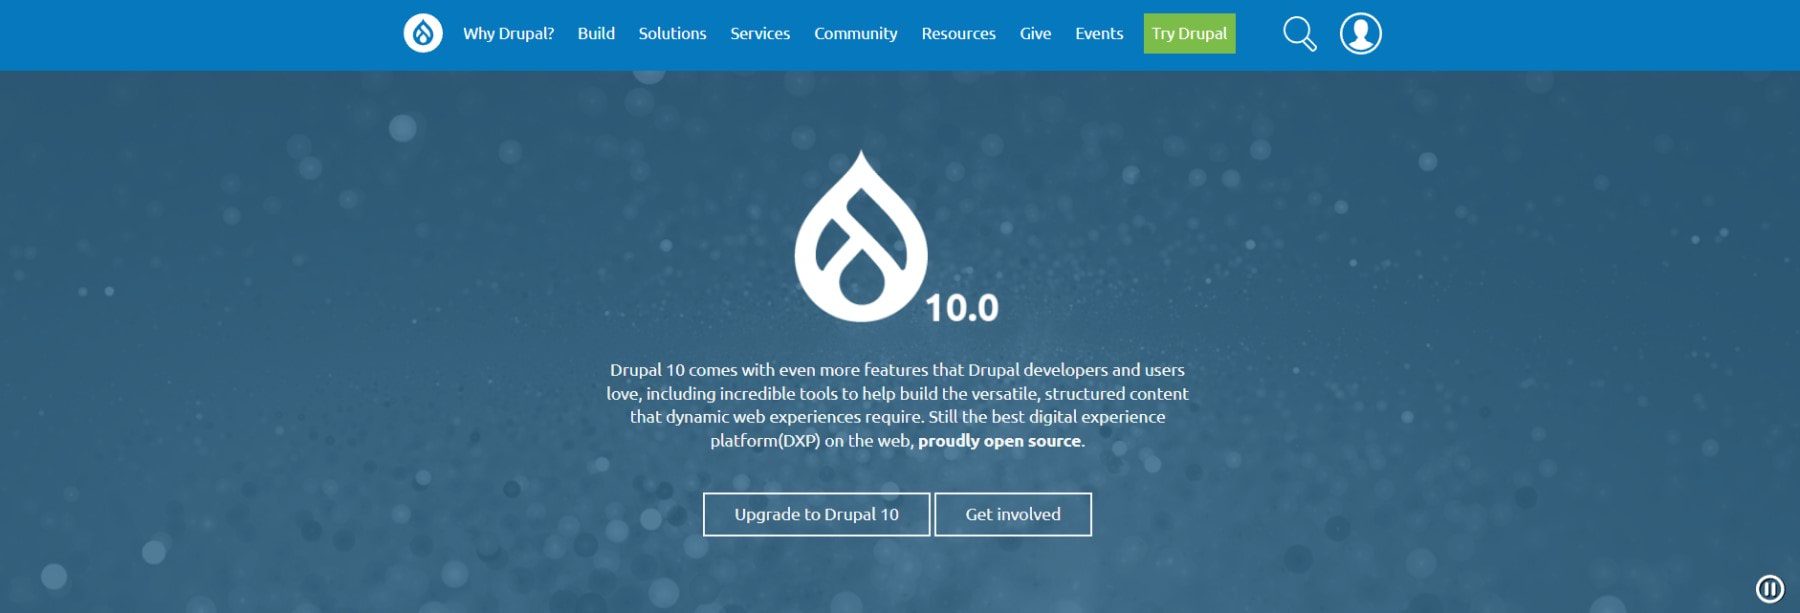 Drupal - Homepage April 2023